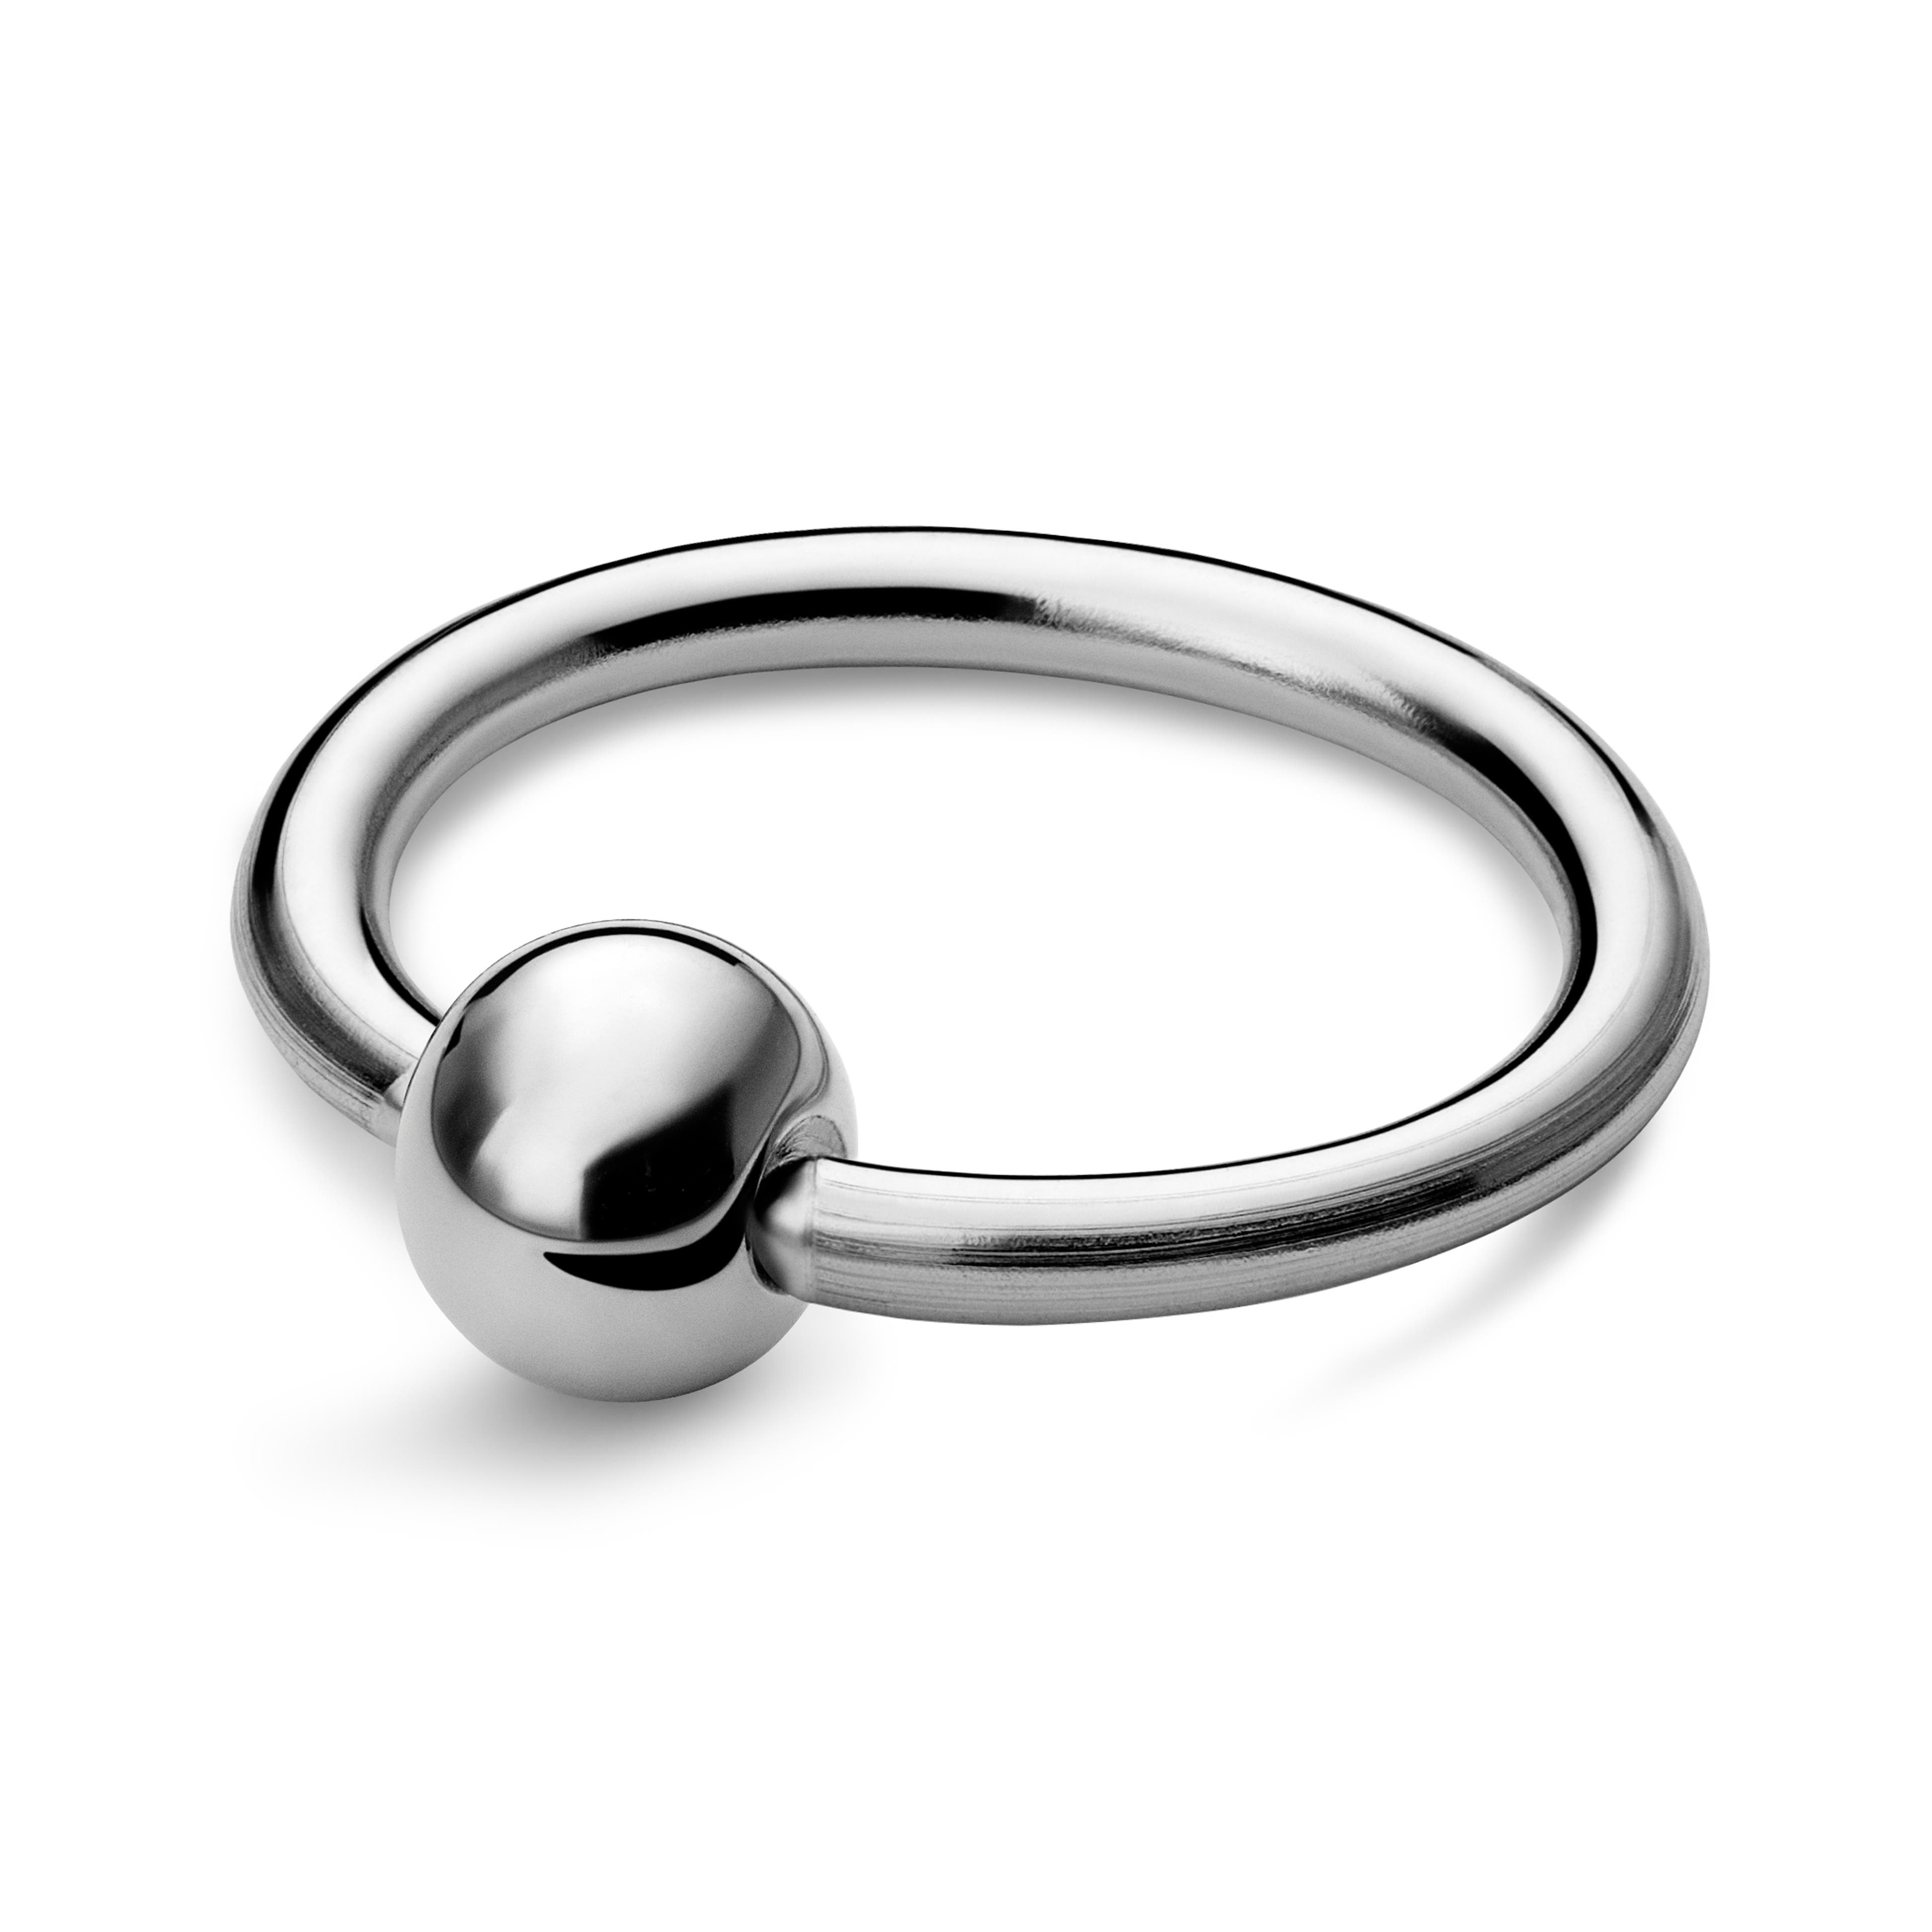 Captive bead ring da 8 mm in titanio color argento